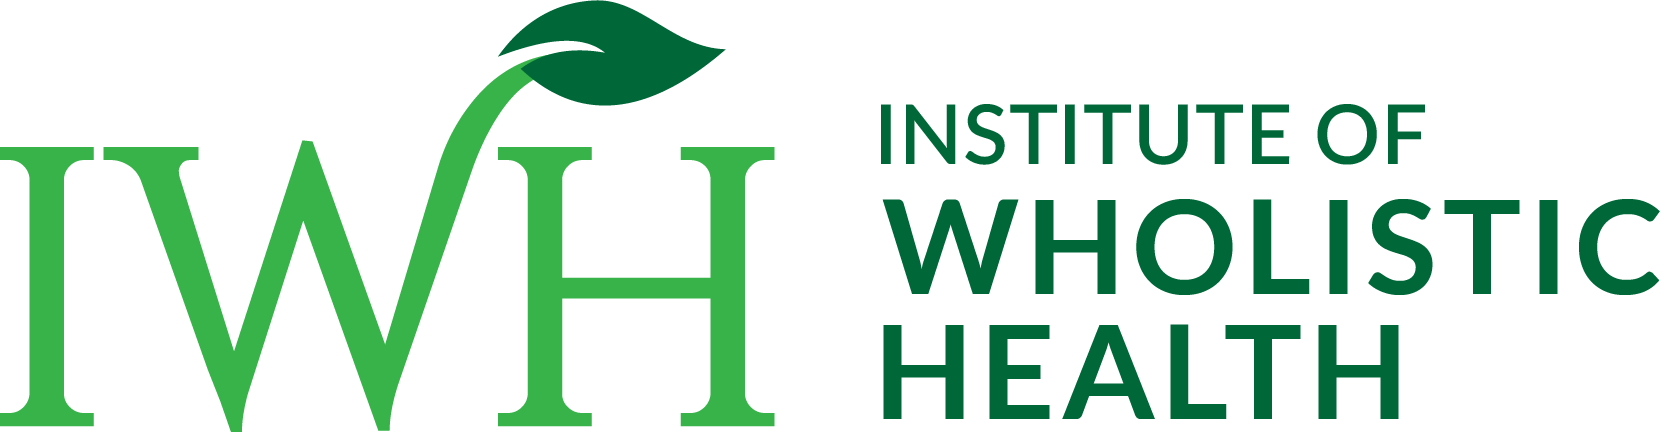 Institute of Wholistic Health